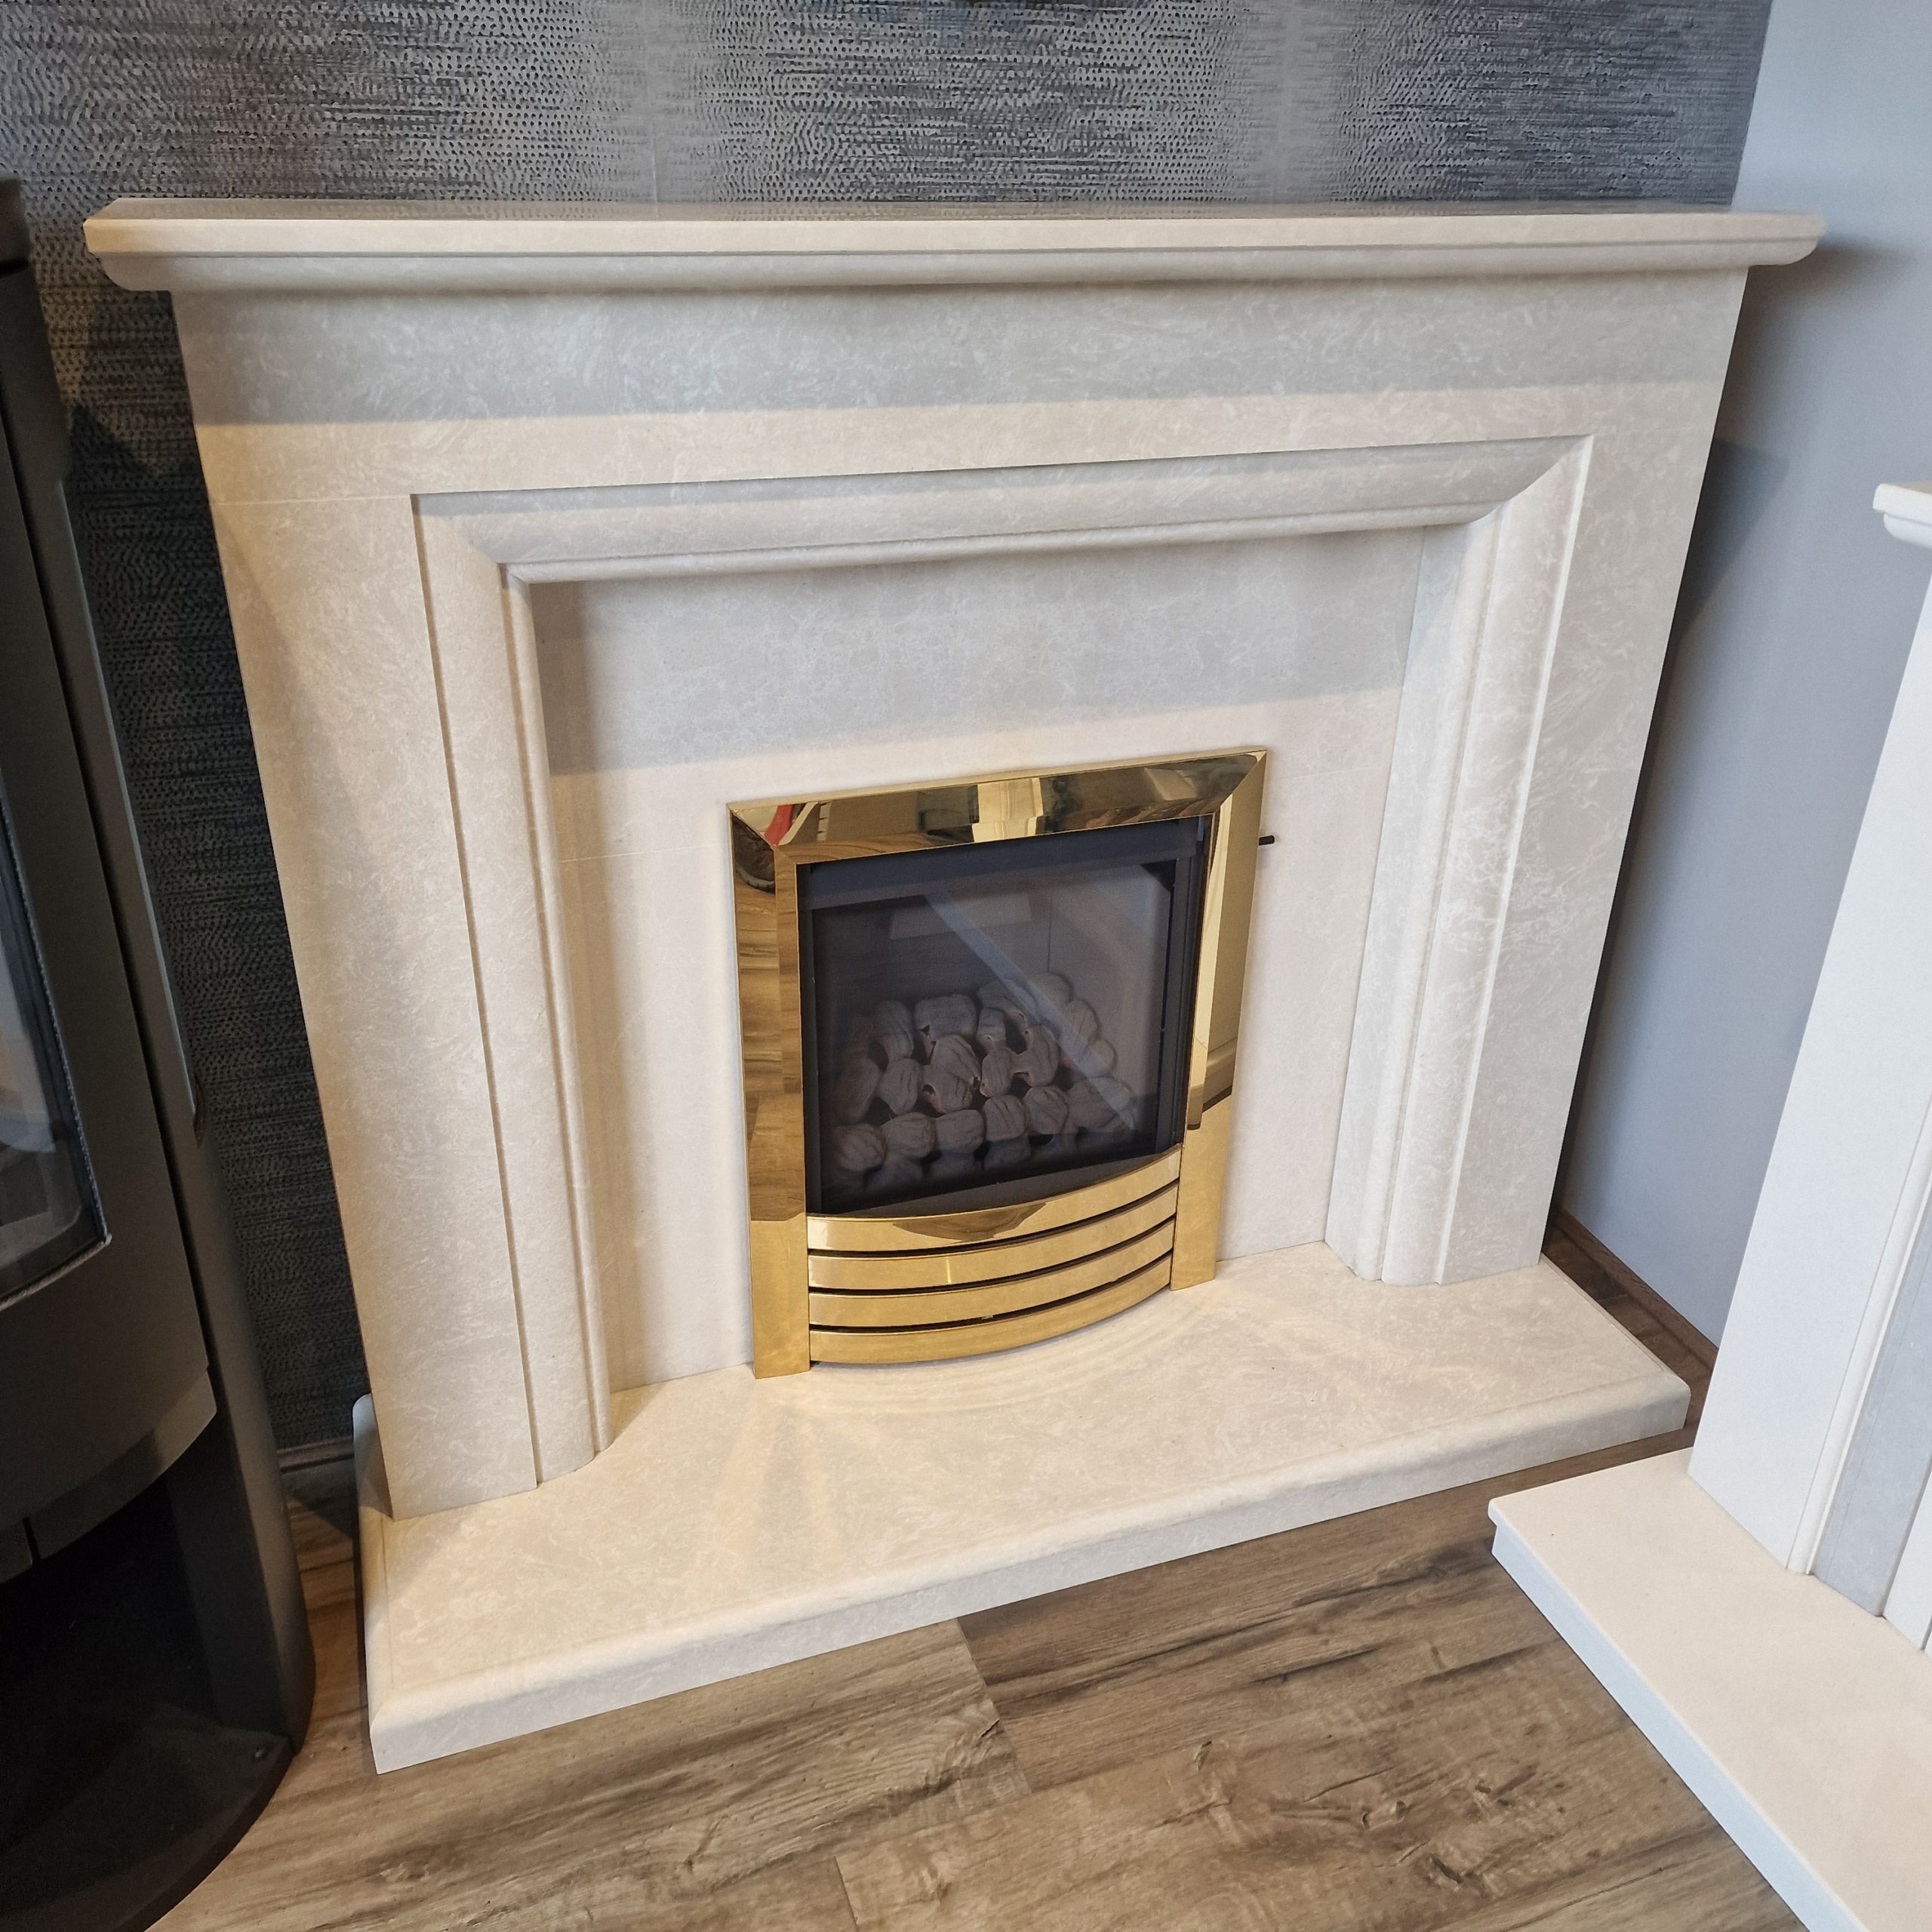 Ex-Display Balanced Flue Fireplace